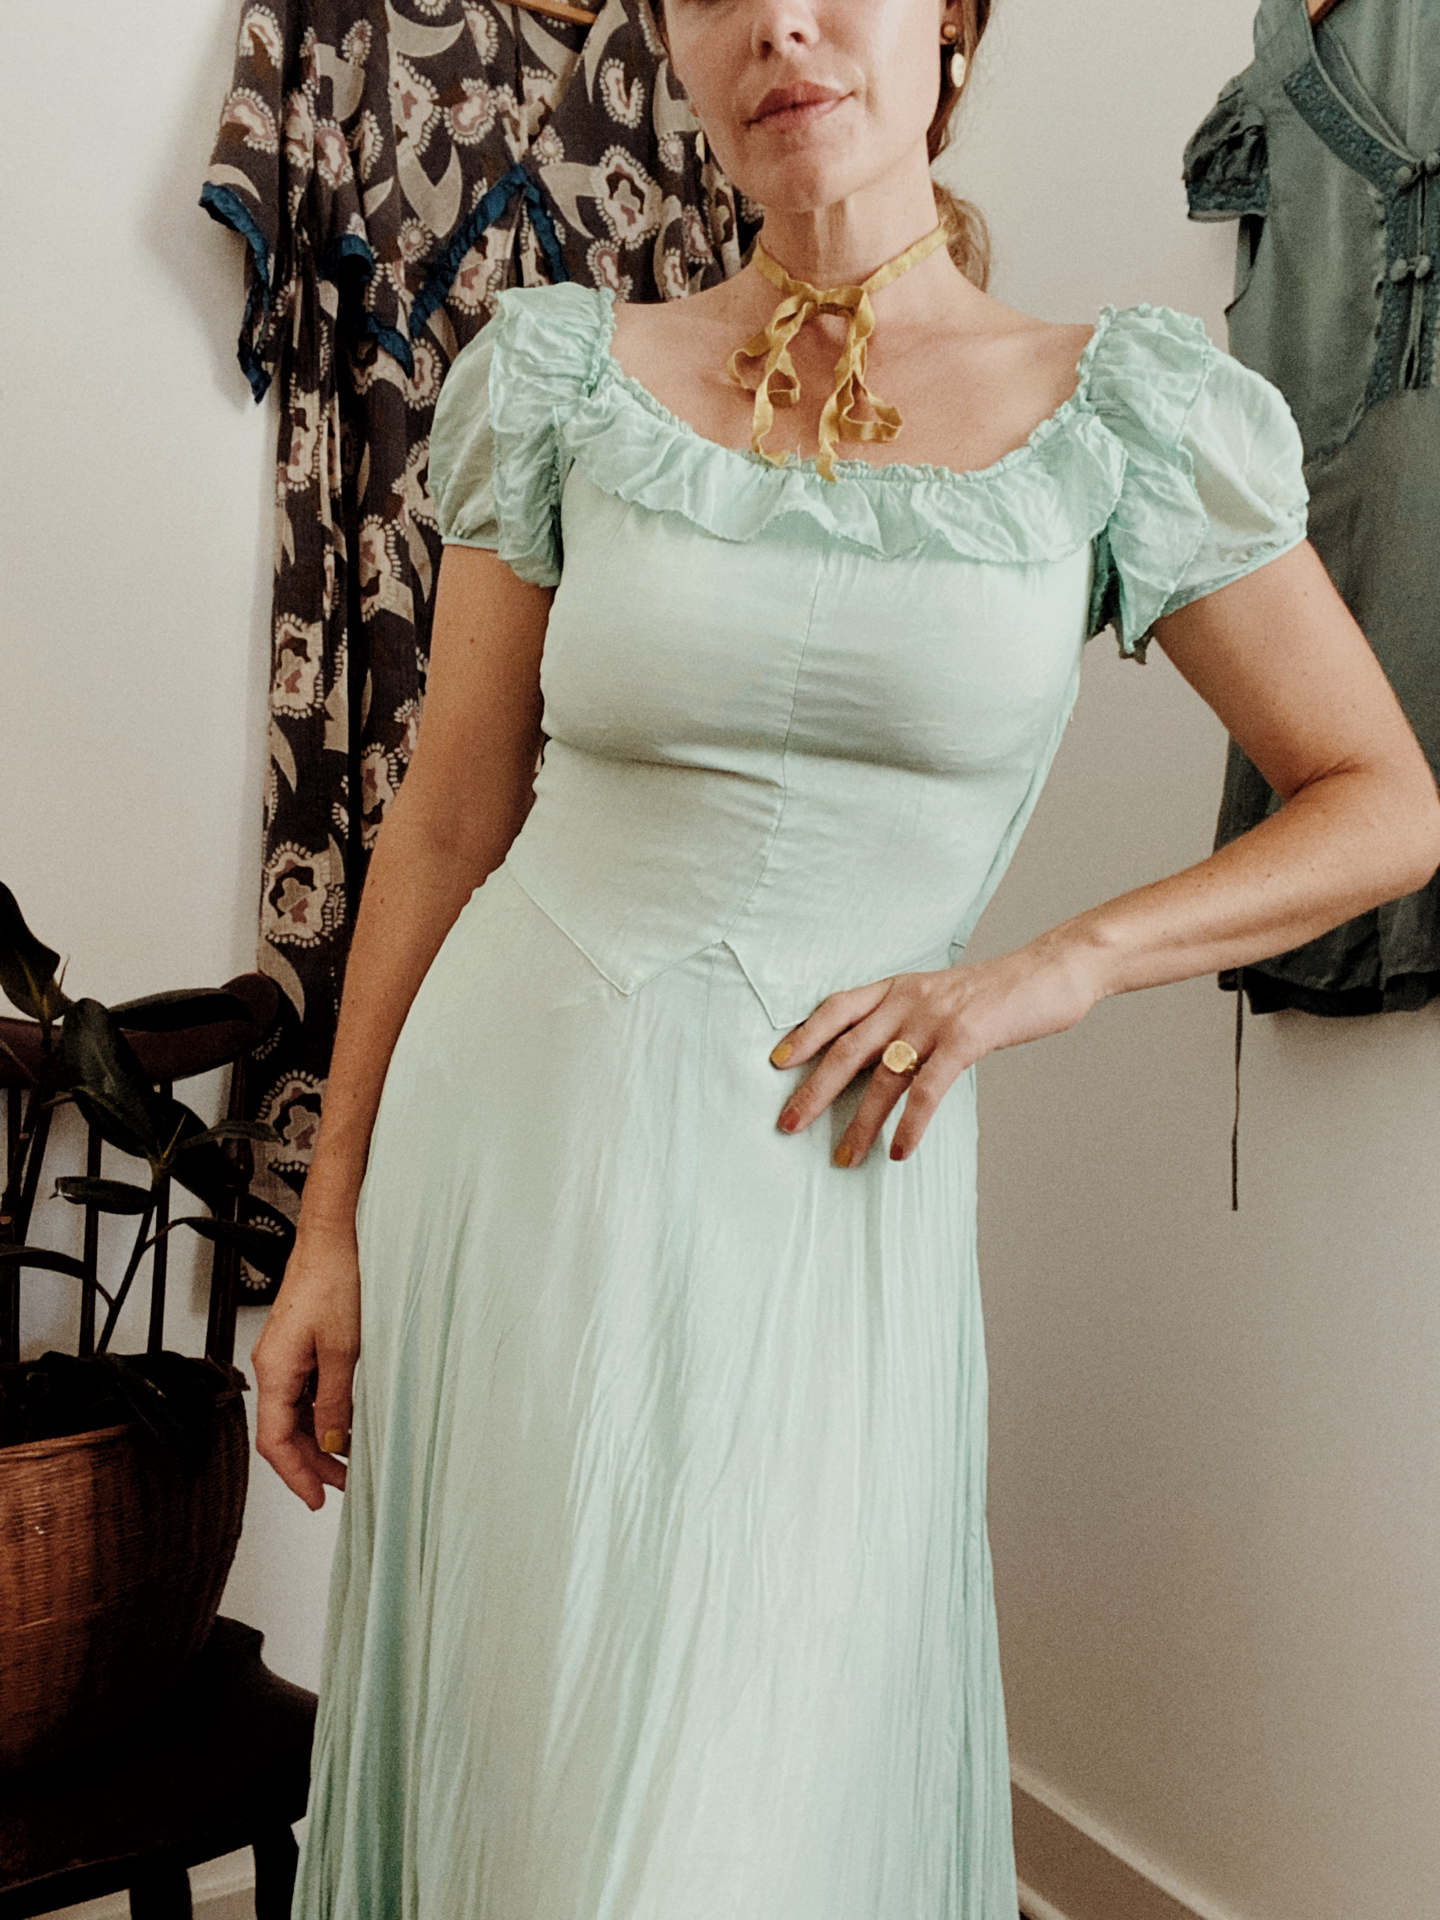 1940s Minty Chiffon Ruffled Gown- 5/6